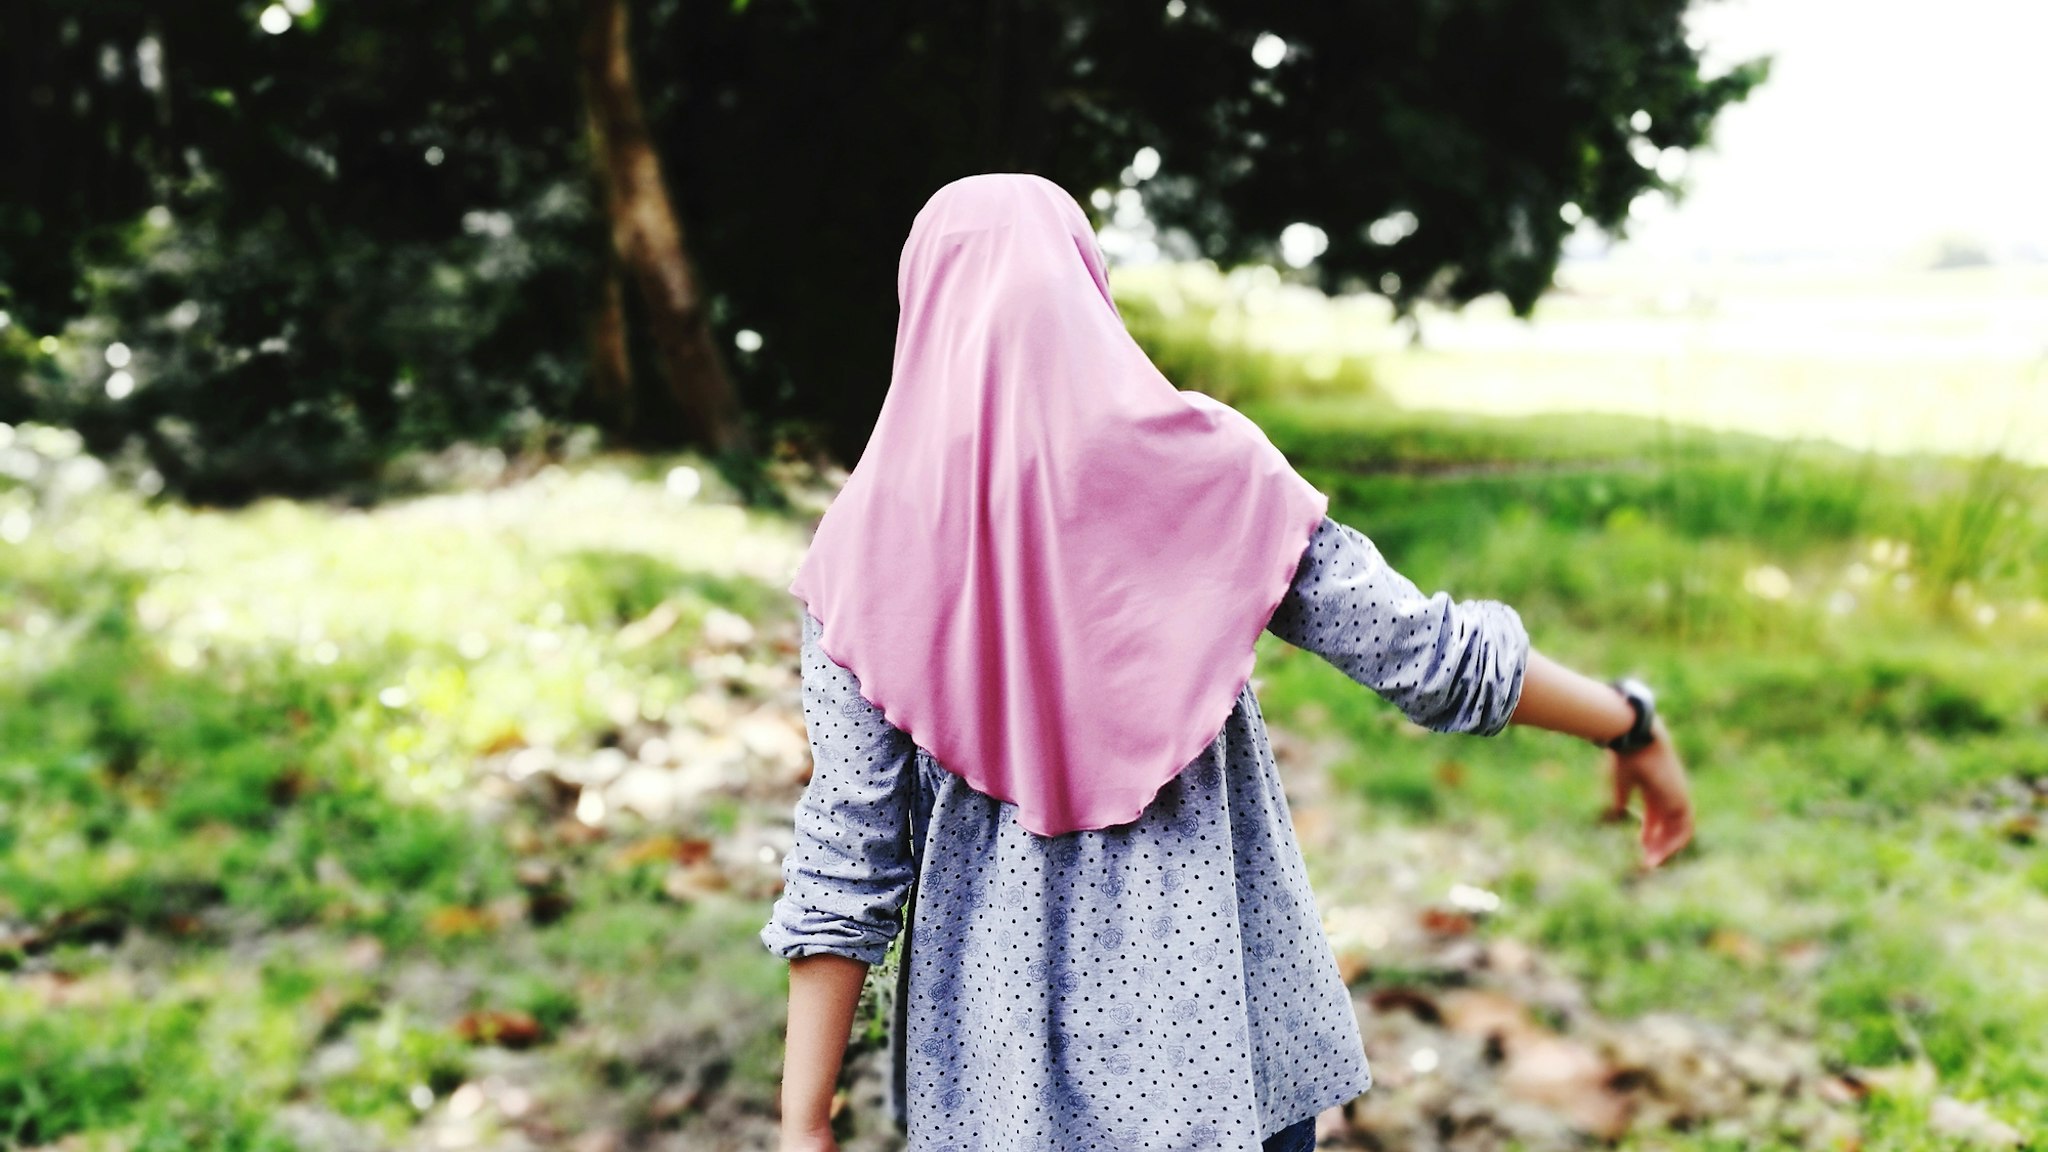 Rear View Of Girl Wearing Hijab Walking On Field - stock photo